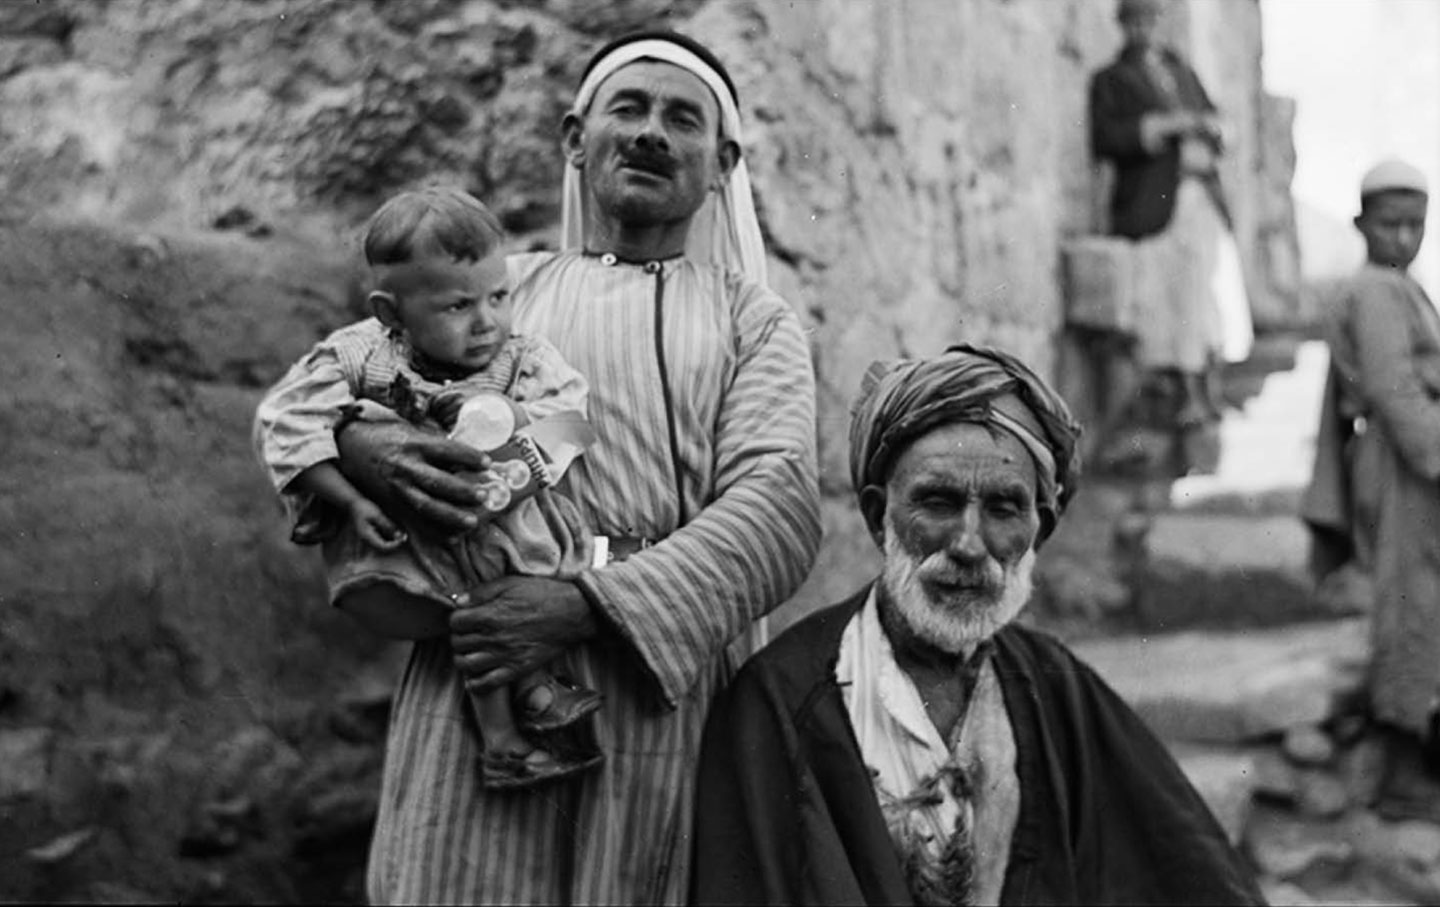 Three generations from the village of Dhahiriyya (located between Hebron and Beersheba), February 9, 1940.